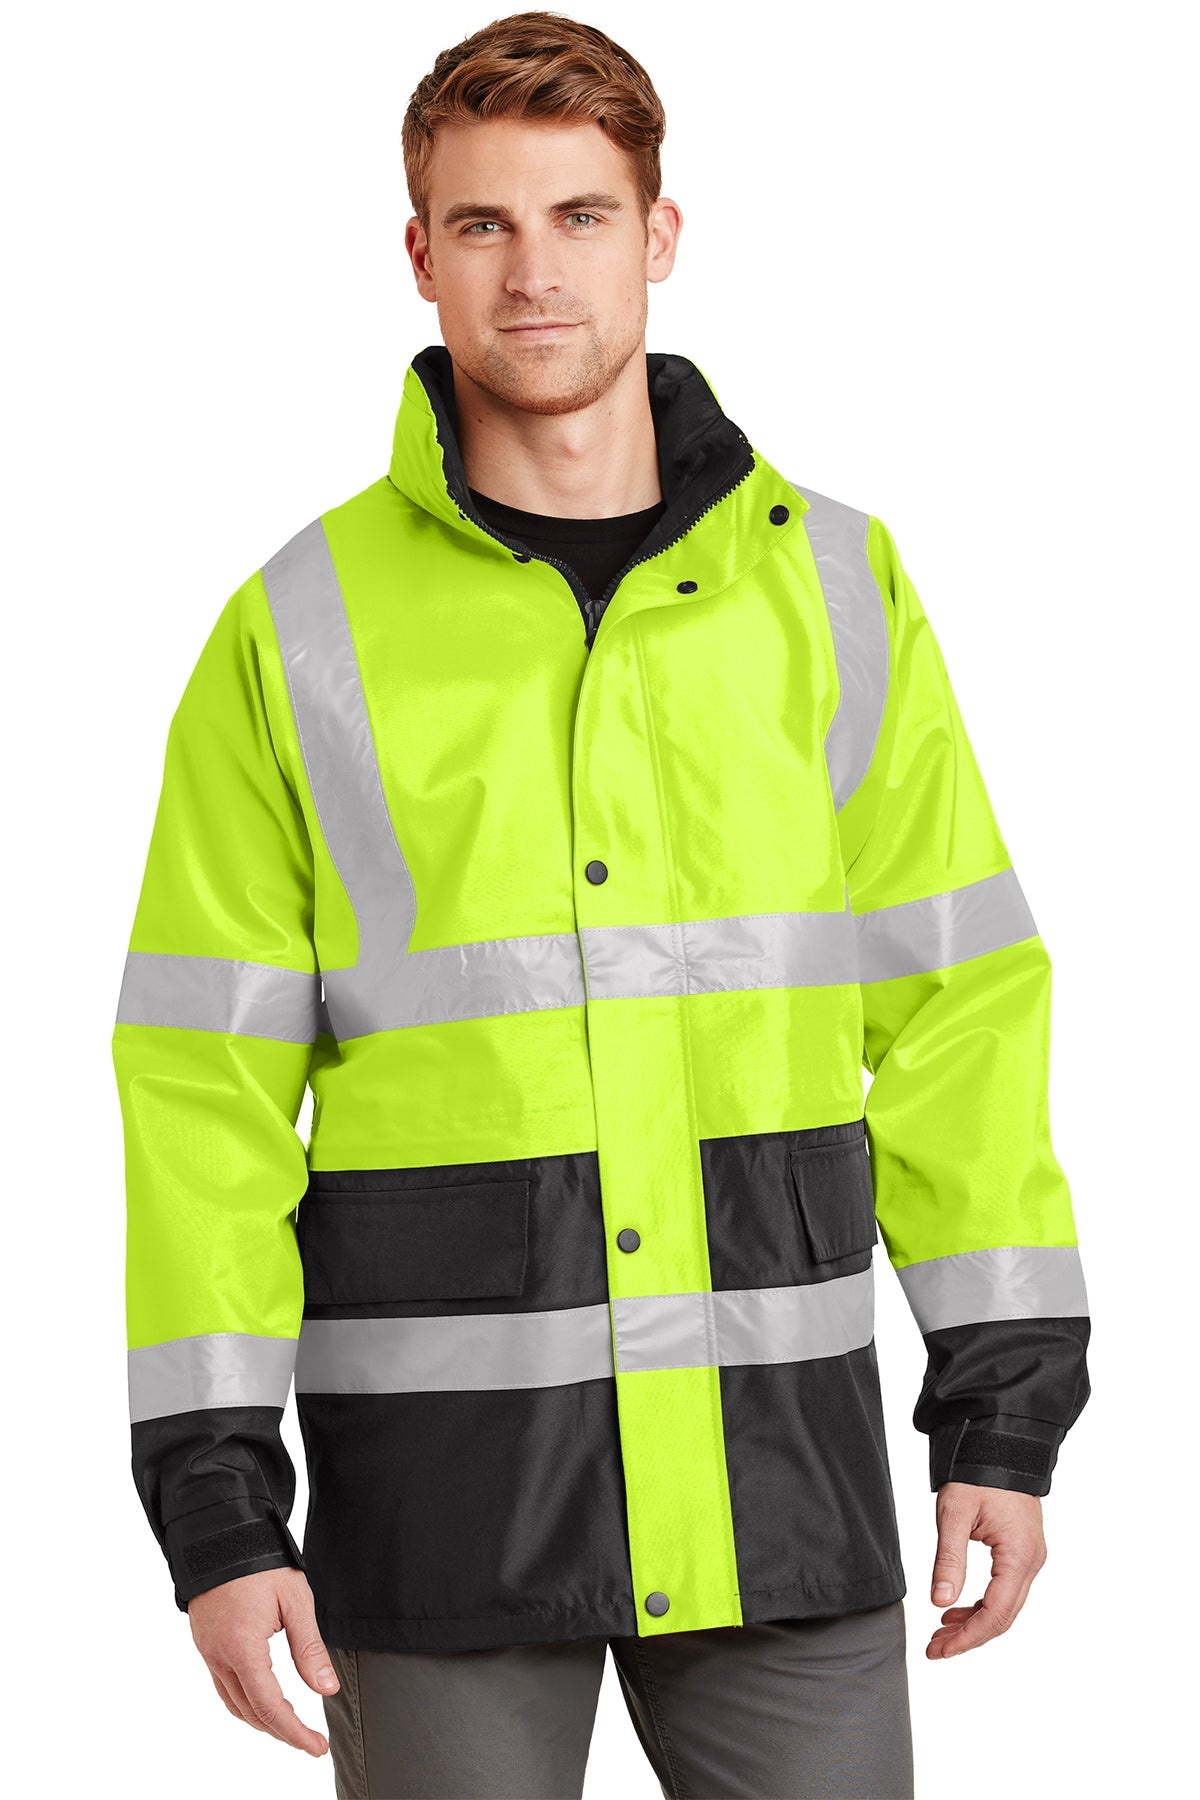 CornerStone Safety Yellow/ Black CSJ24 embroidered team jackets